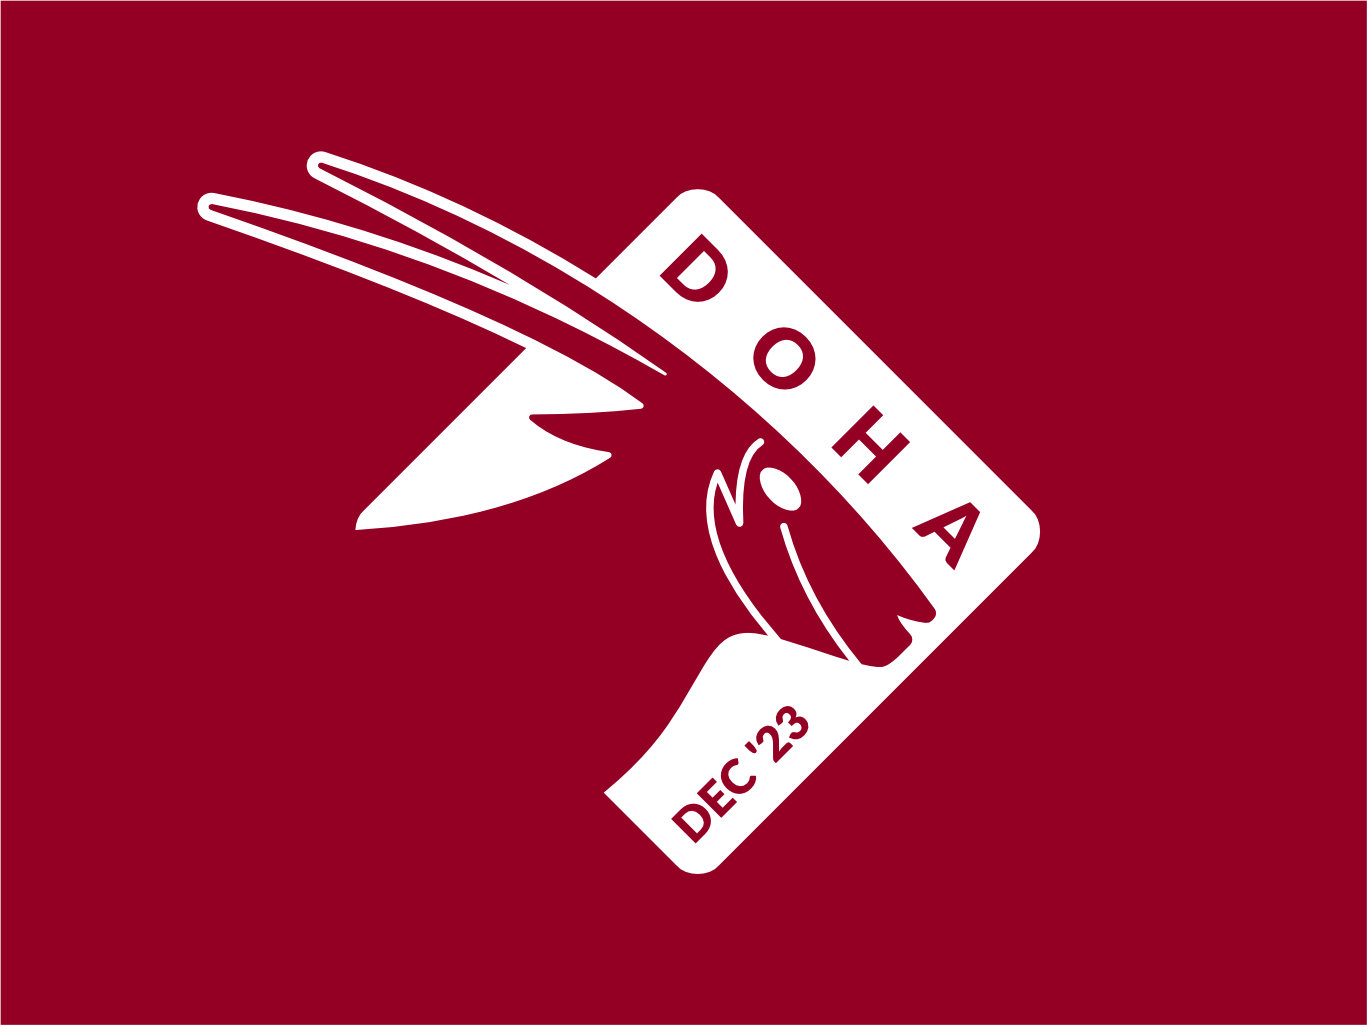 Passport style stamp for Doha